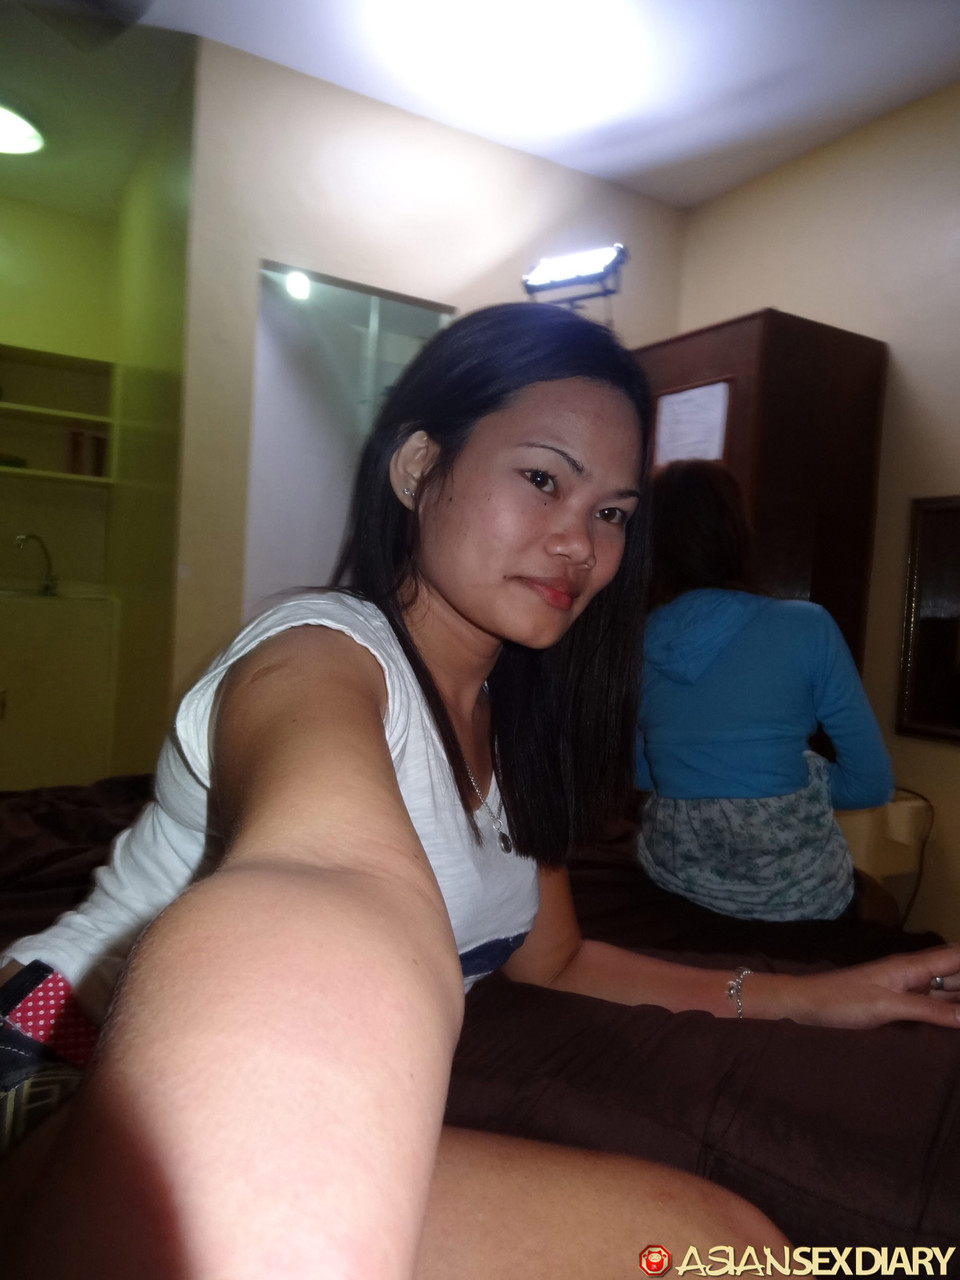 Horny Asian girls take selfies and fuck lucky tourist while enjoying free AC foto porno #422594962